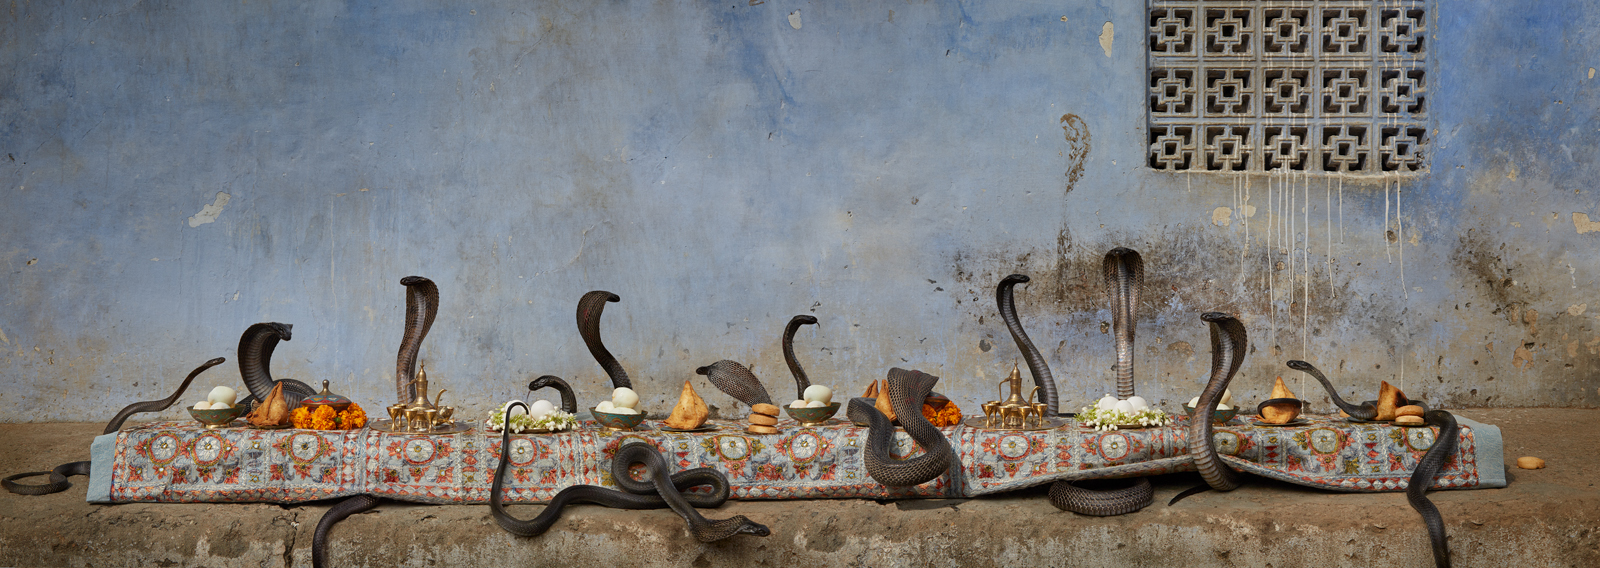  The Cobra Feast  India, 2016  10”x28” | 20”x56” | 40”x112” 